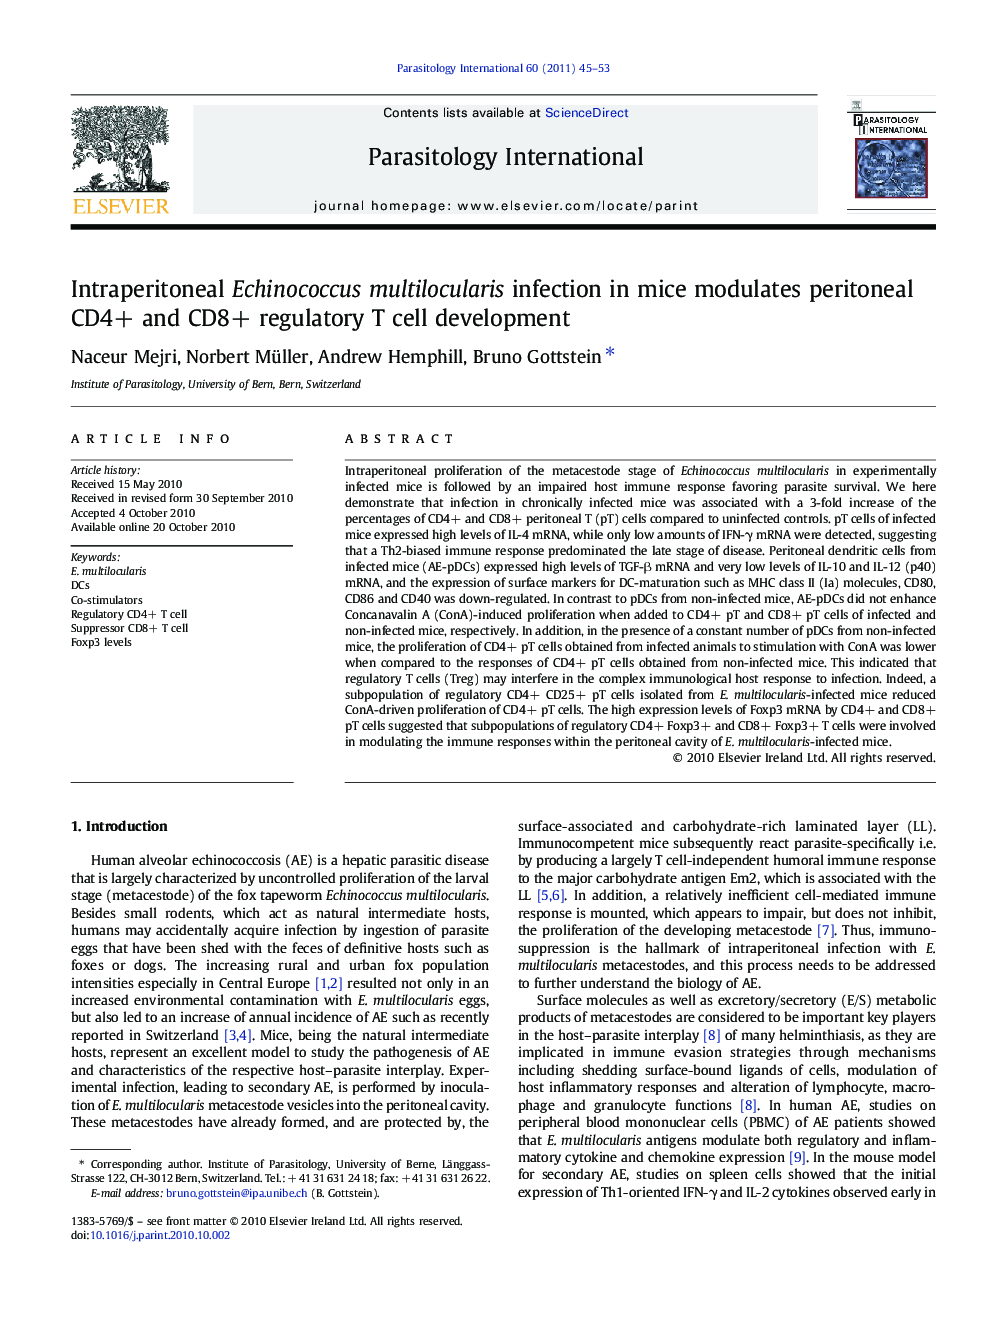 Intraperitoneal Echinococcus multilocularis infection in mice modulates peritoneal CD4+ and CD8+ regulatory T cell development